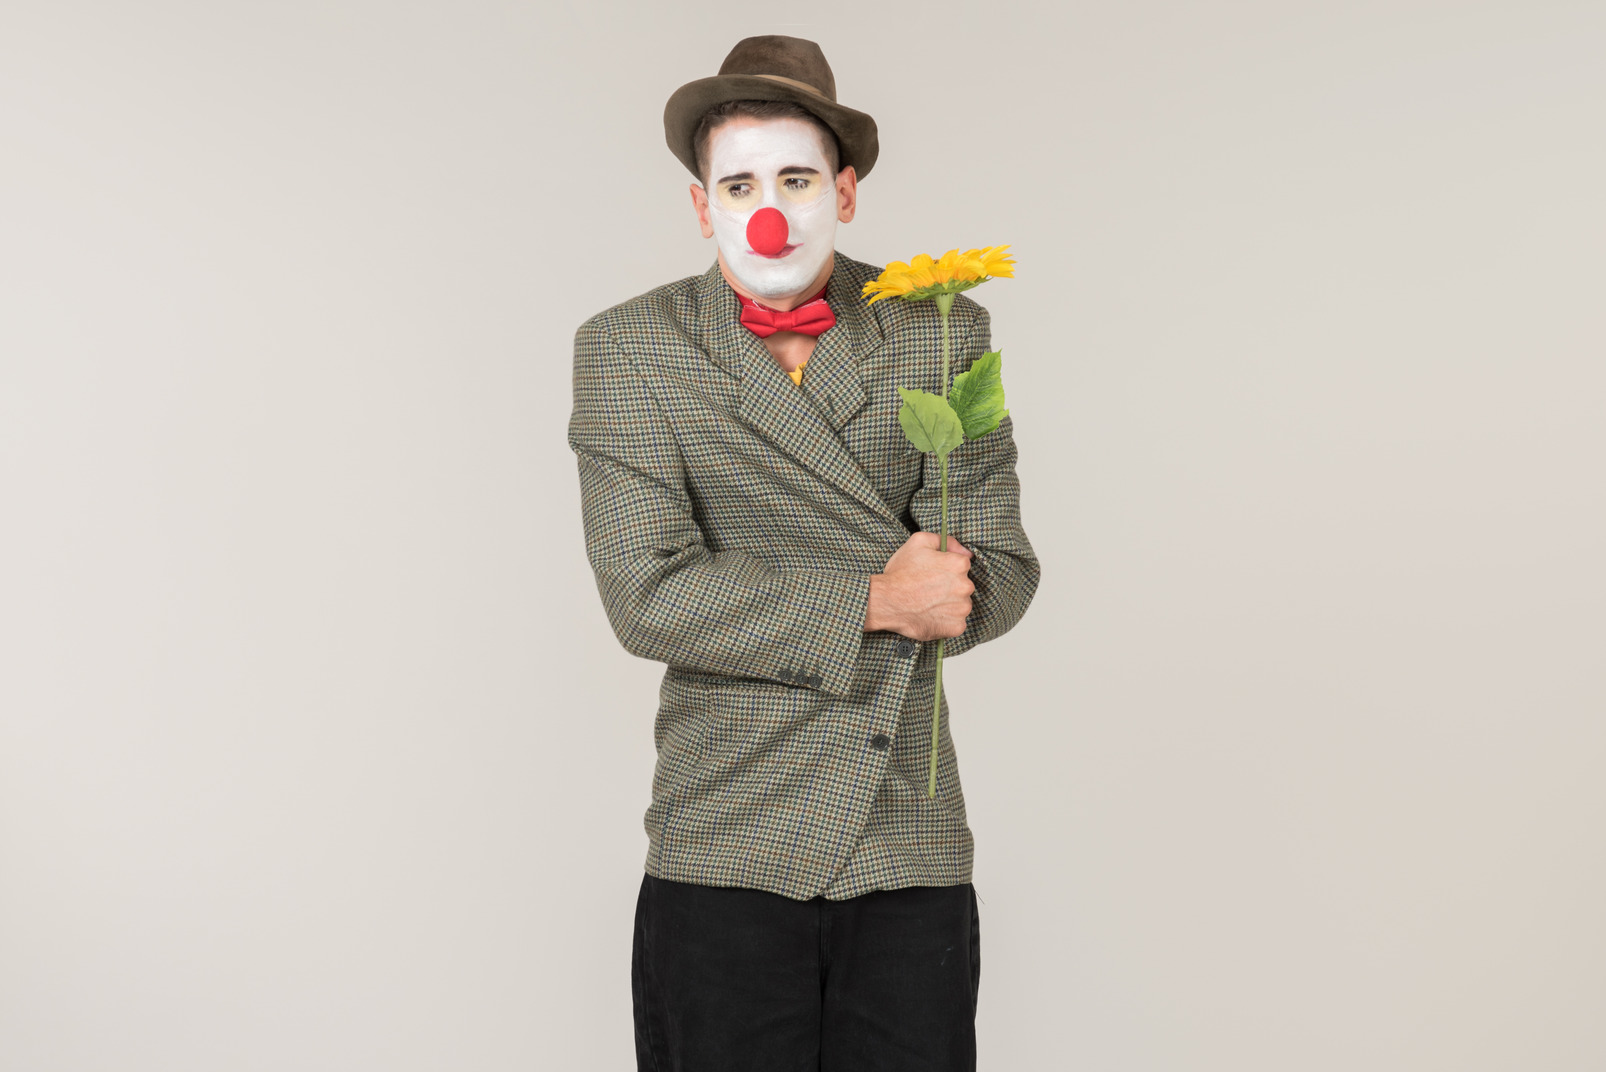 Sad looking male clown holding sunflower